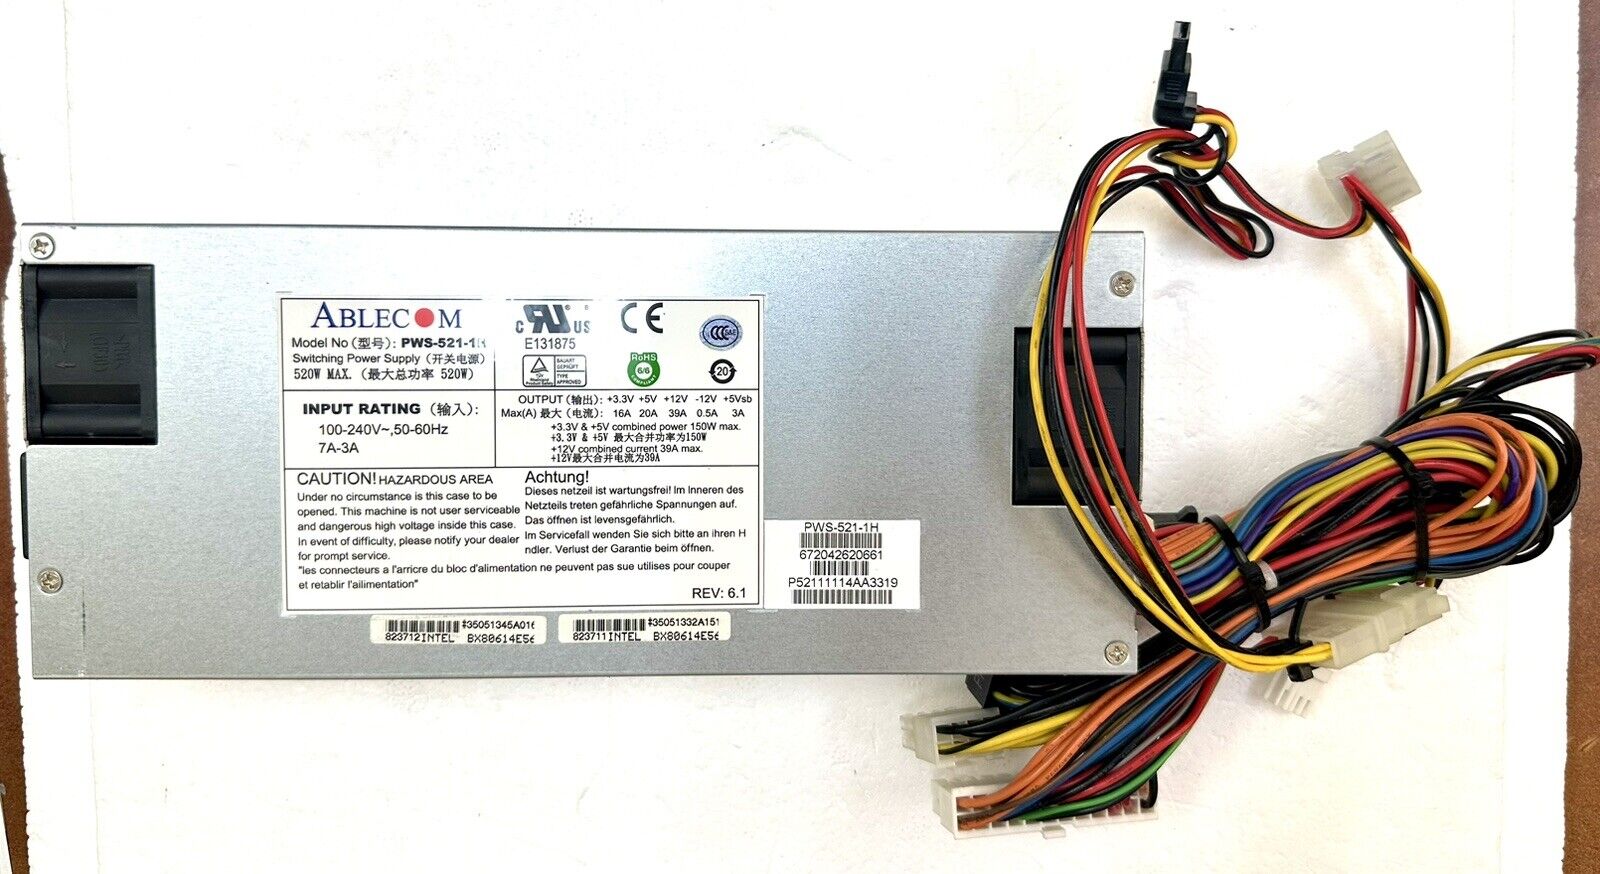 Supermicro Ablecom PWS-521-1H 520W 1U Chassis Server Power Supply PSU